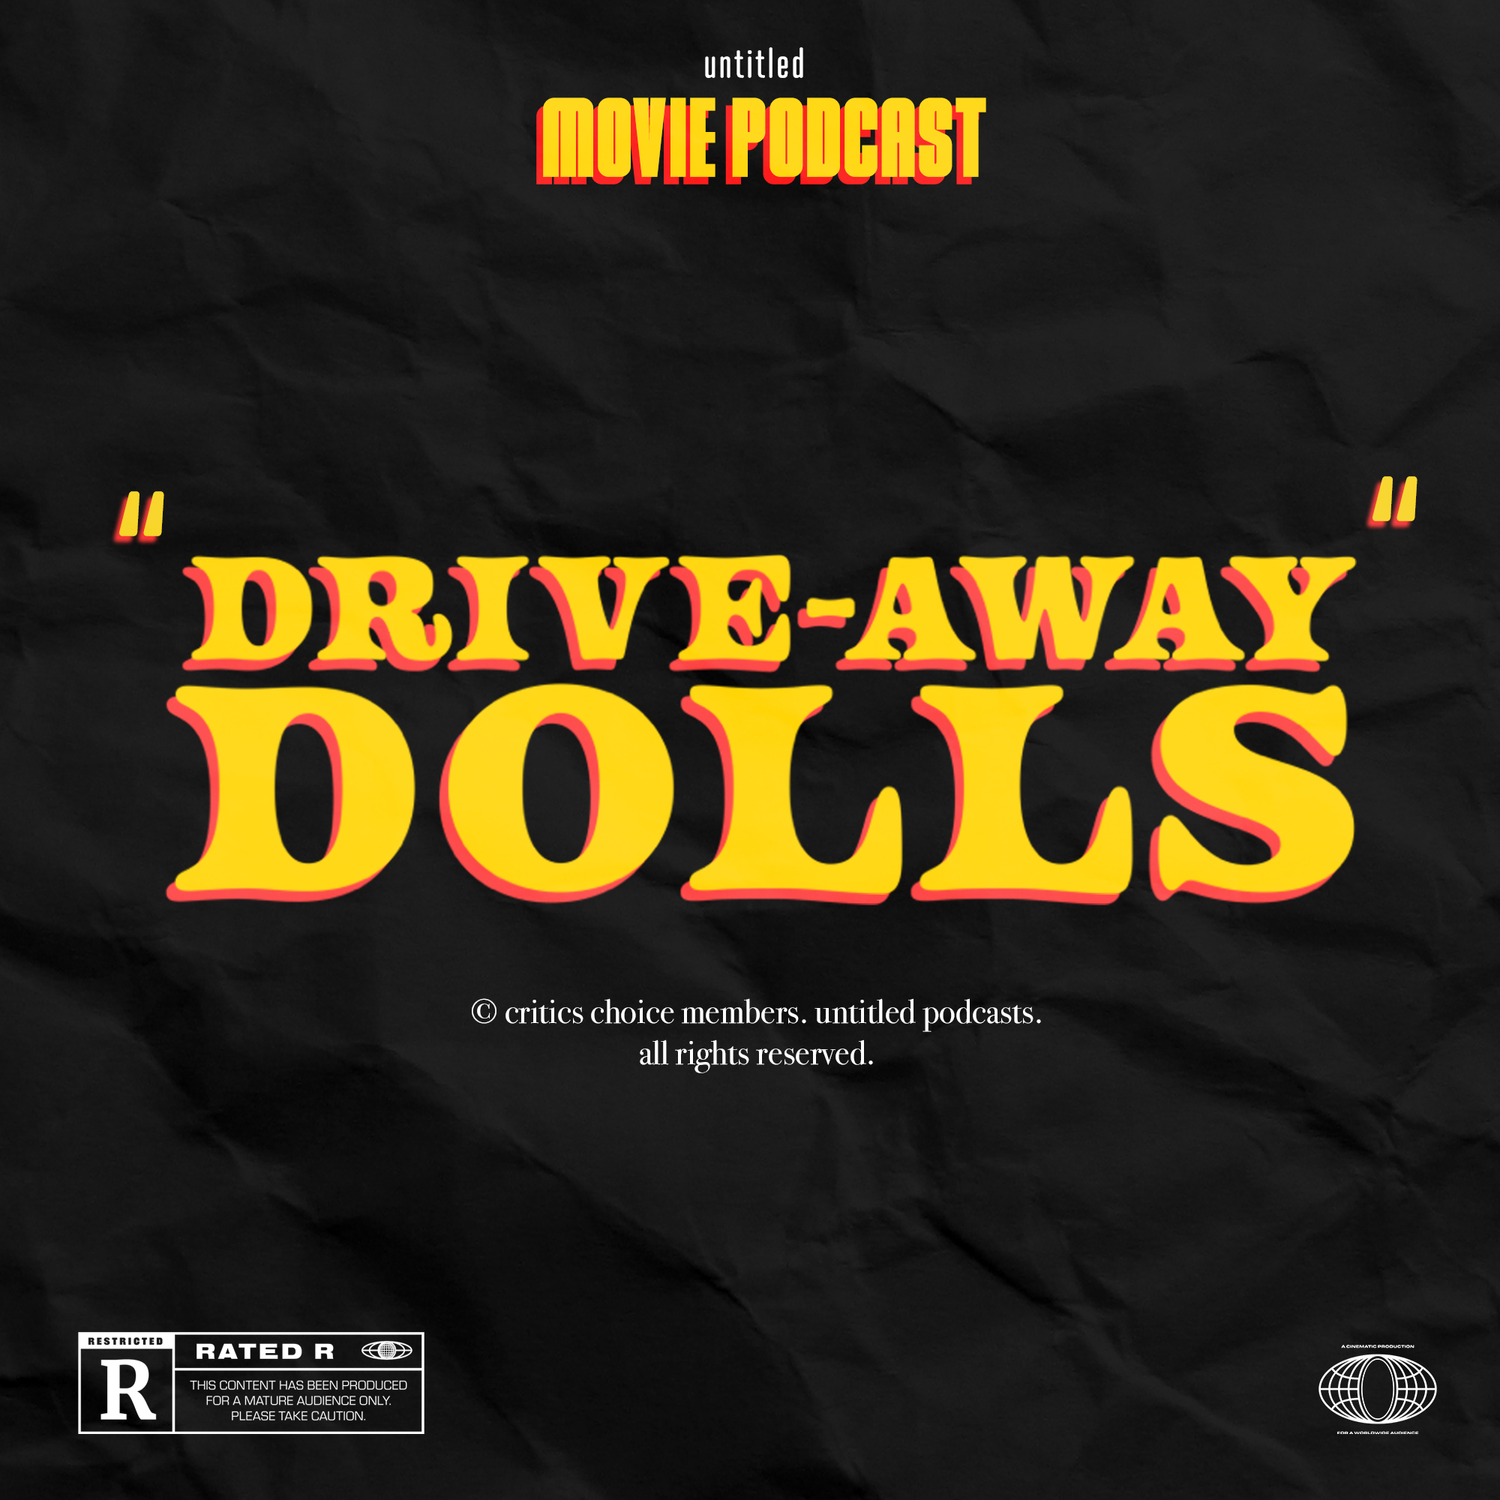 Ethan Coen's Drive-Away Dolls